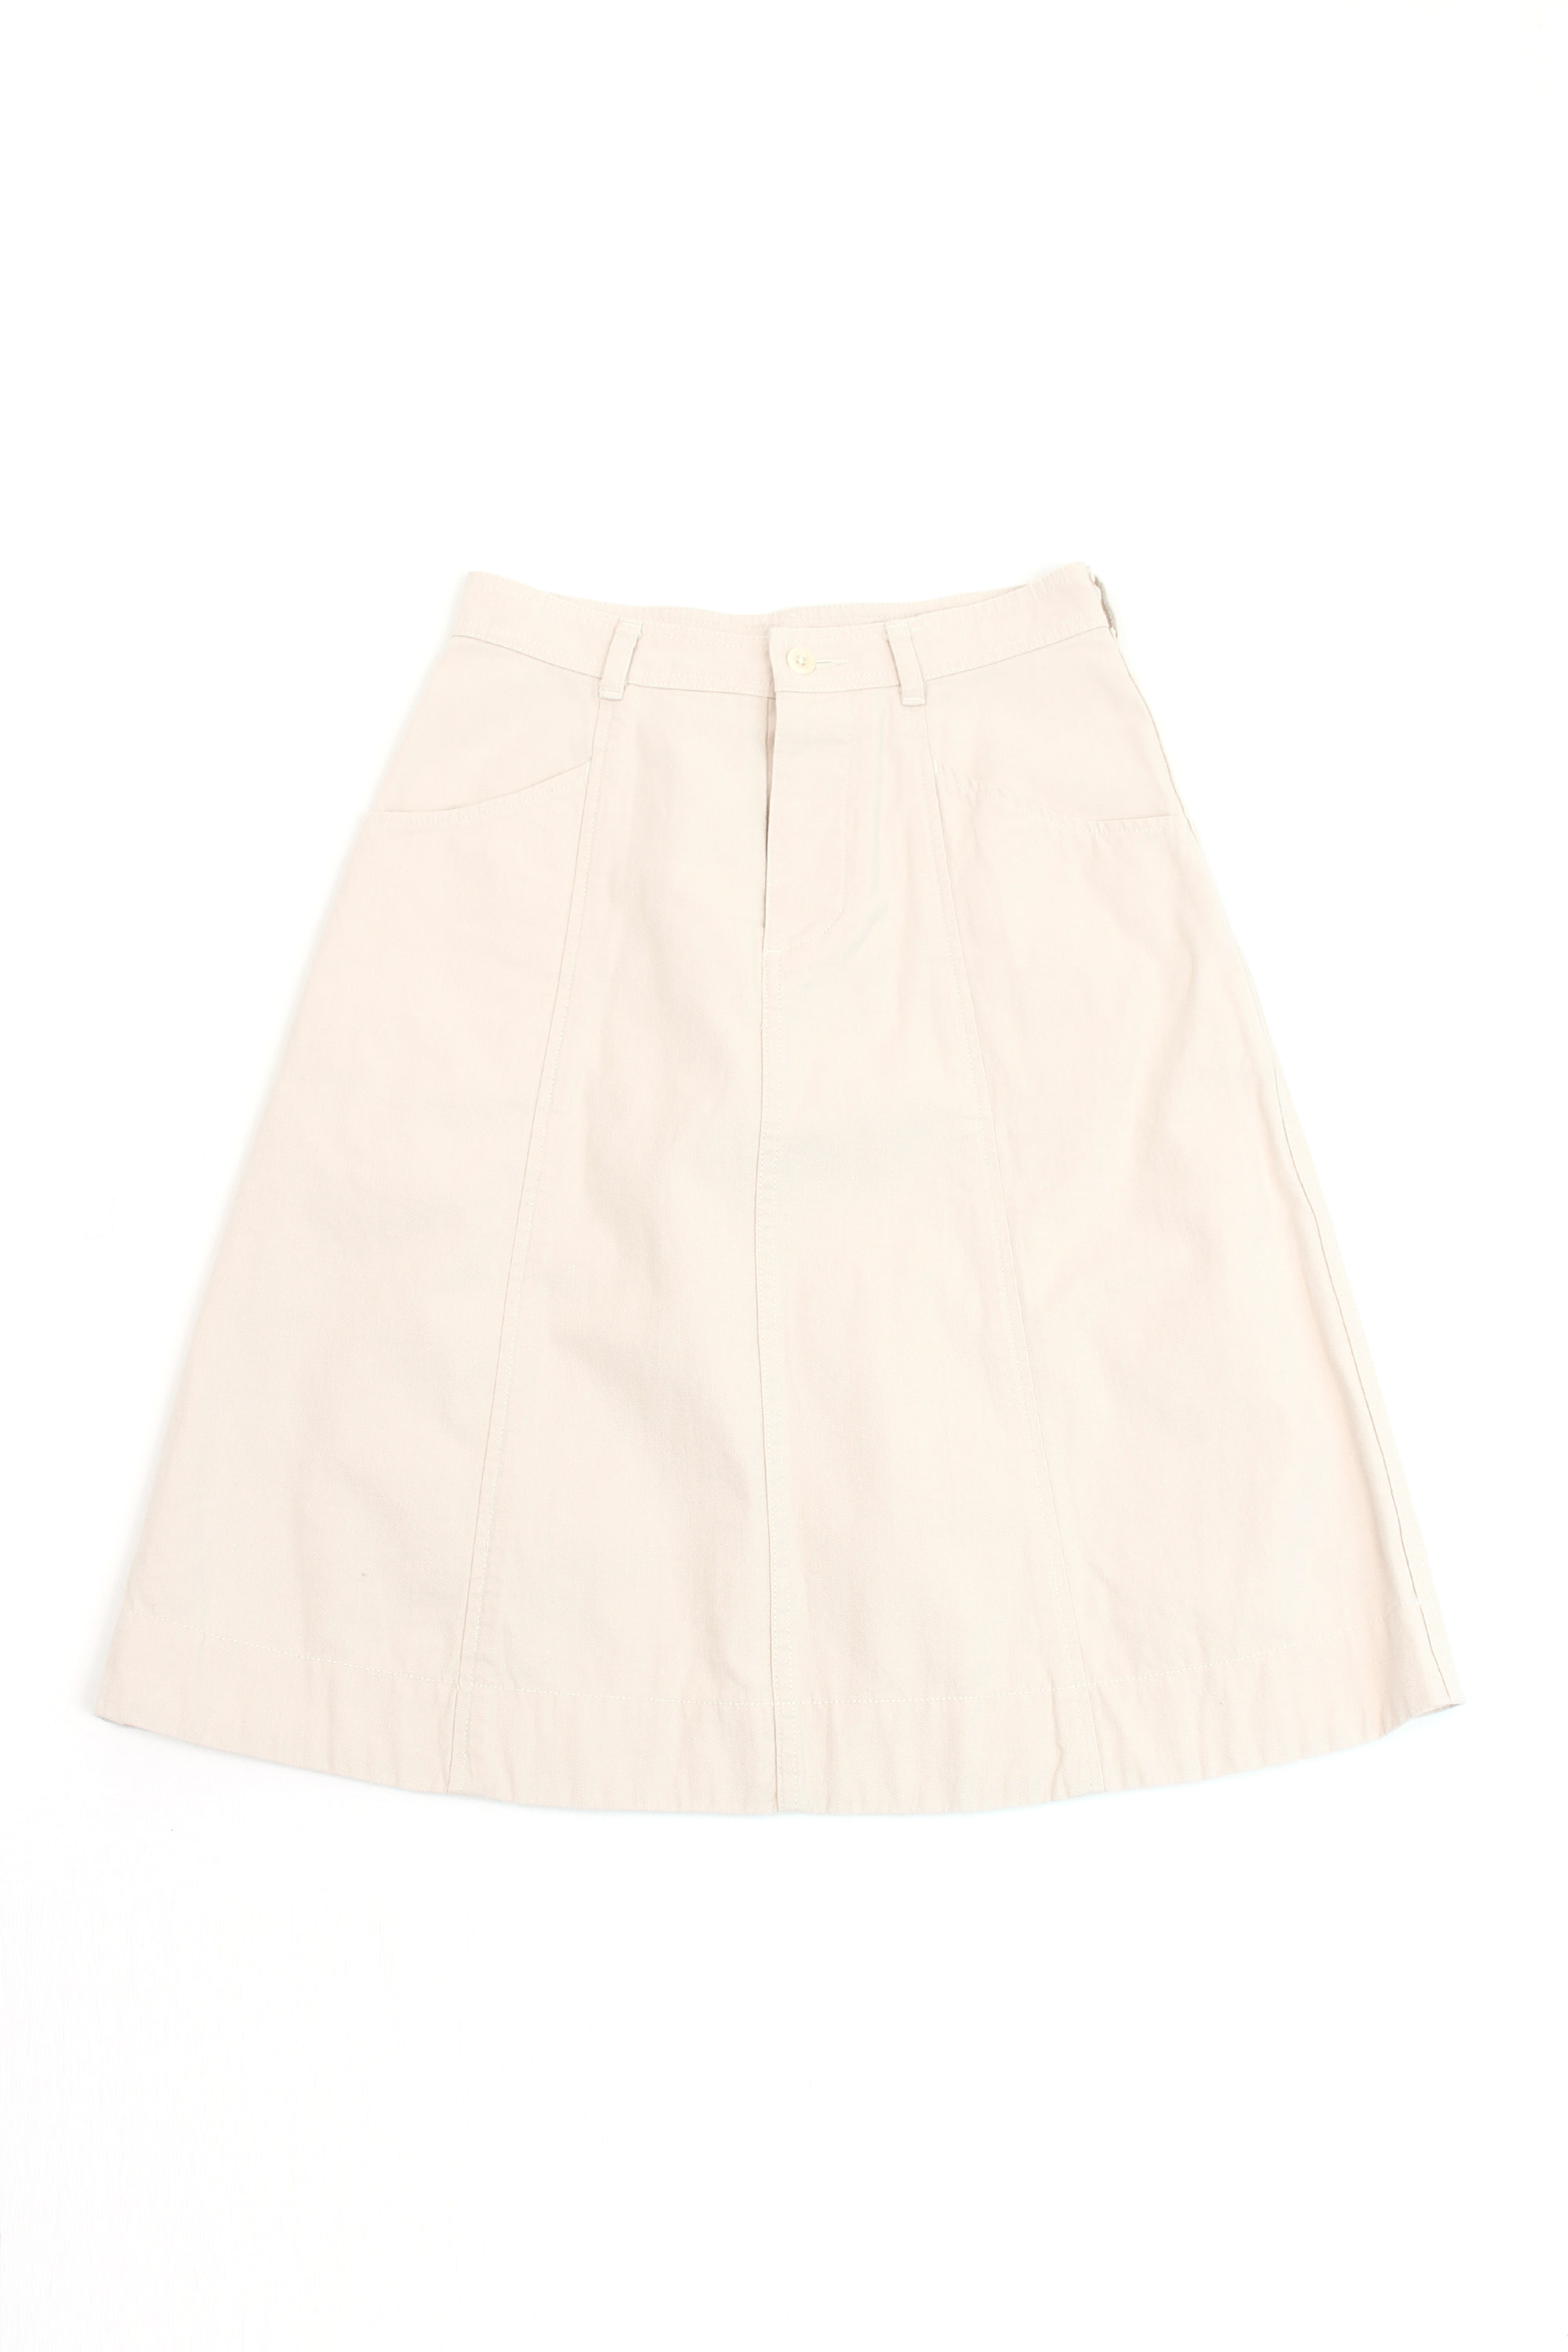 MHL cotton skirts